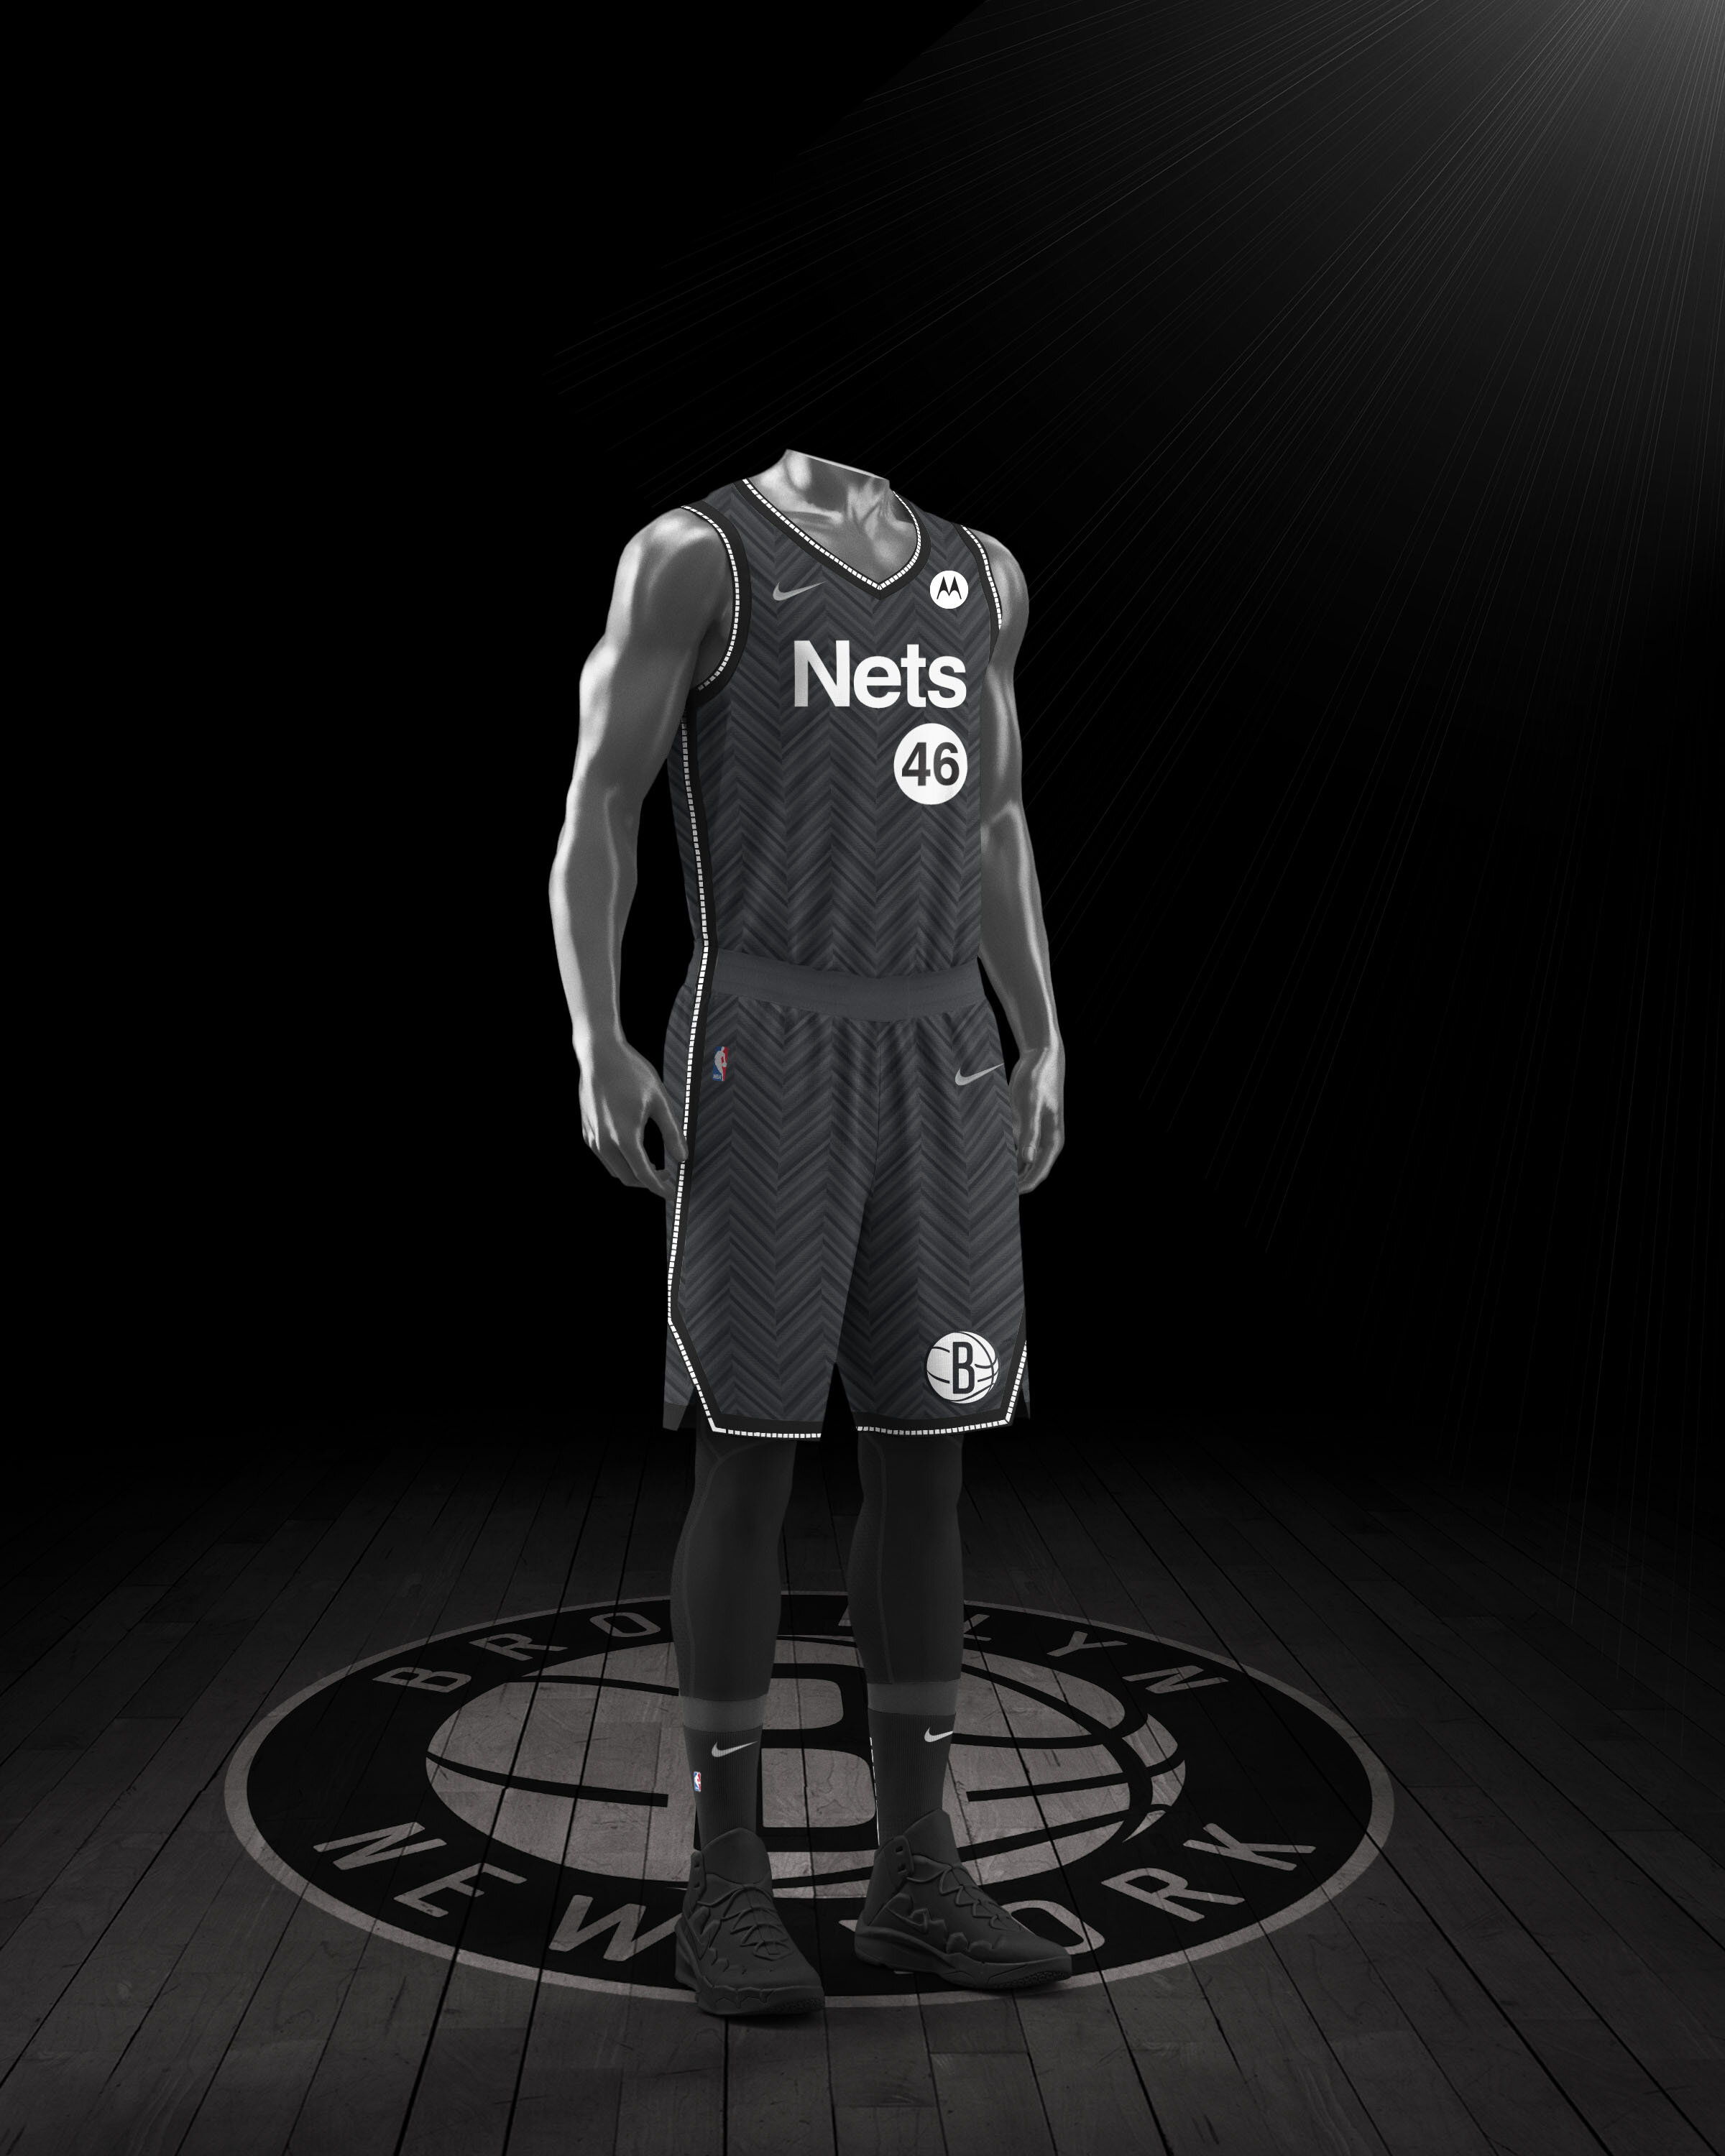 Keep track of every new uniform for the 2020-21 NBA season